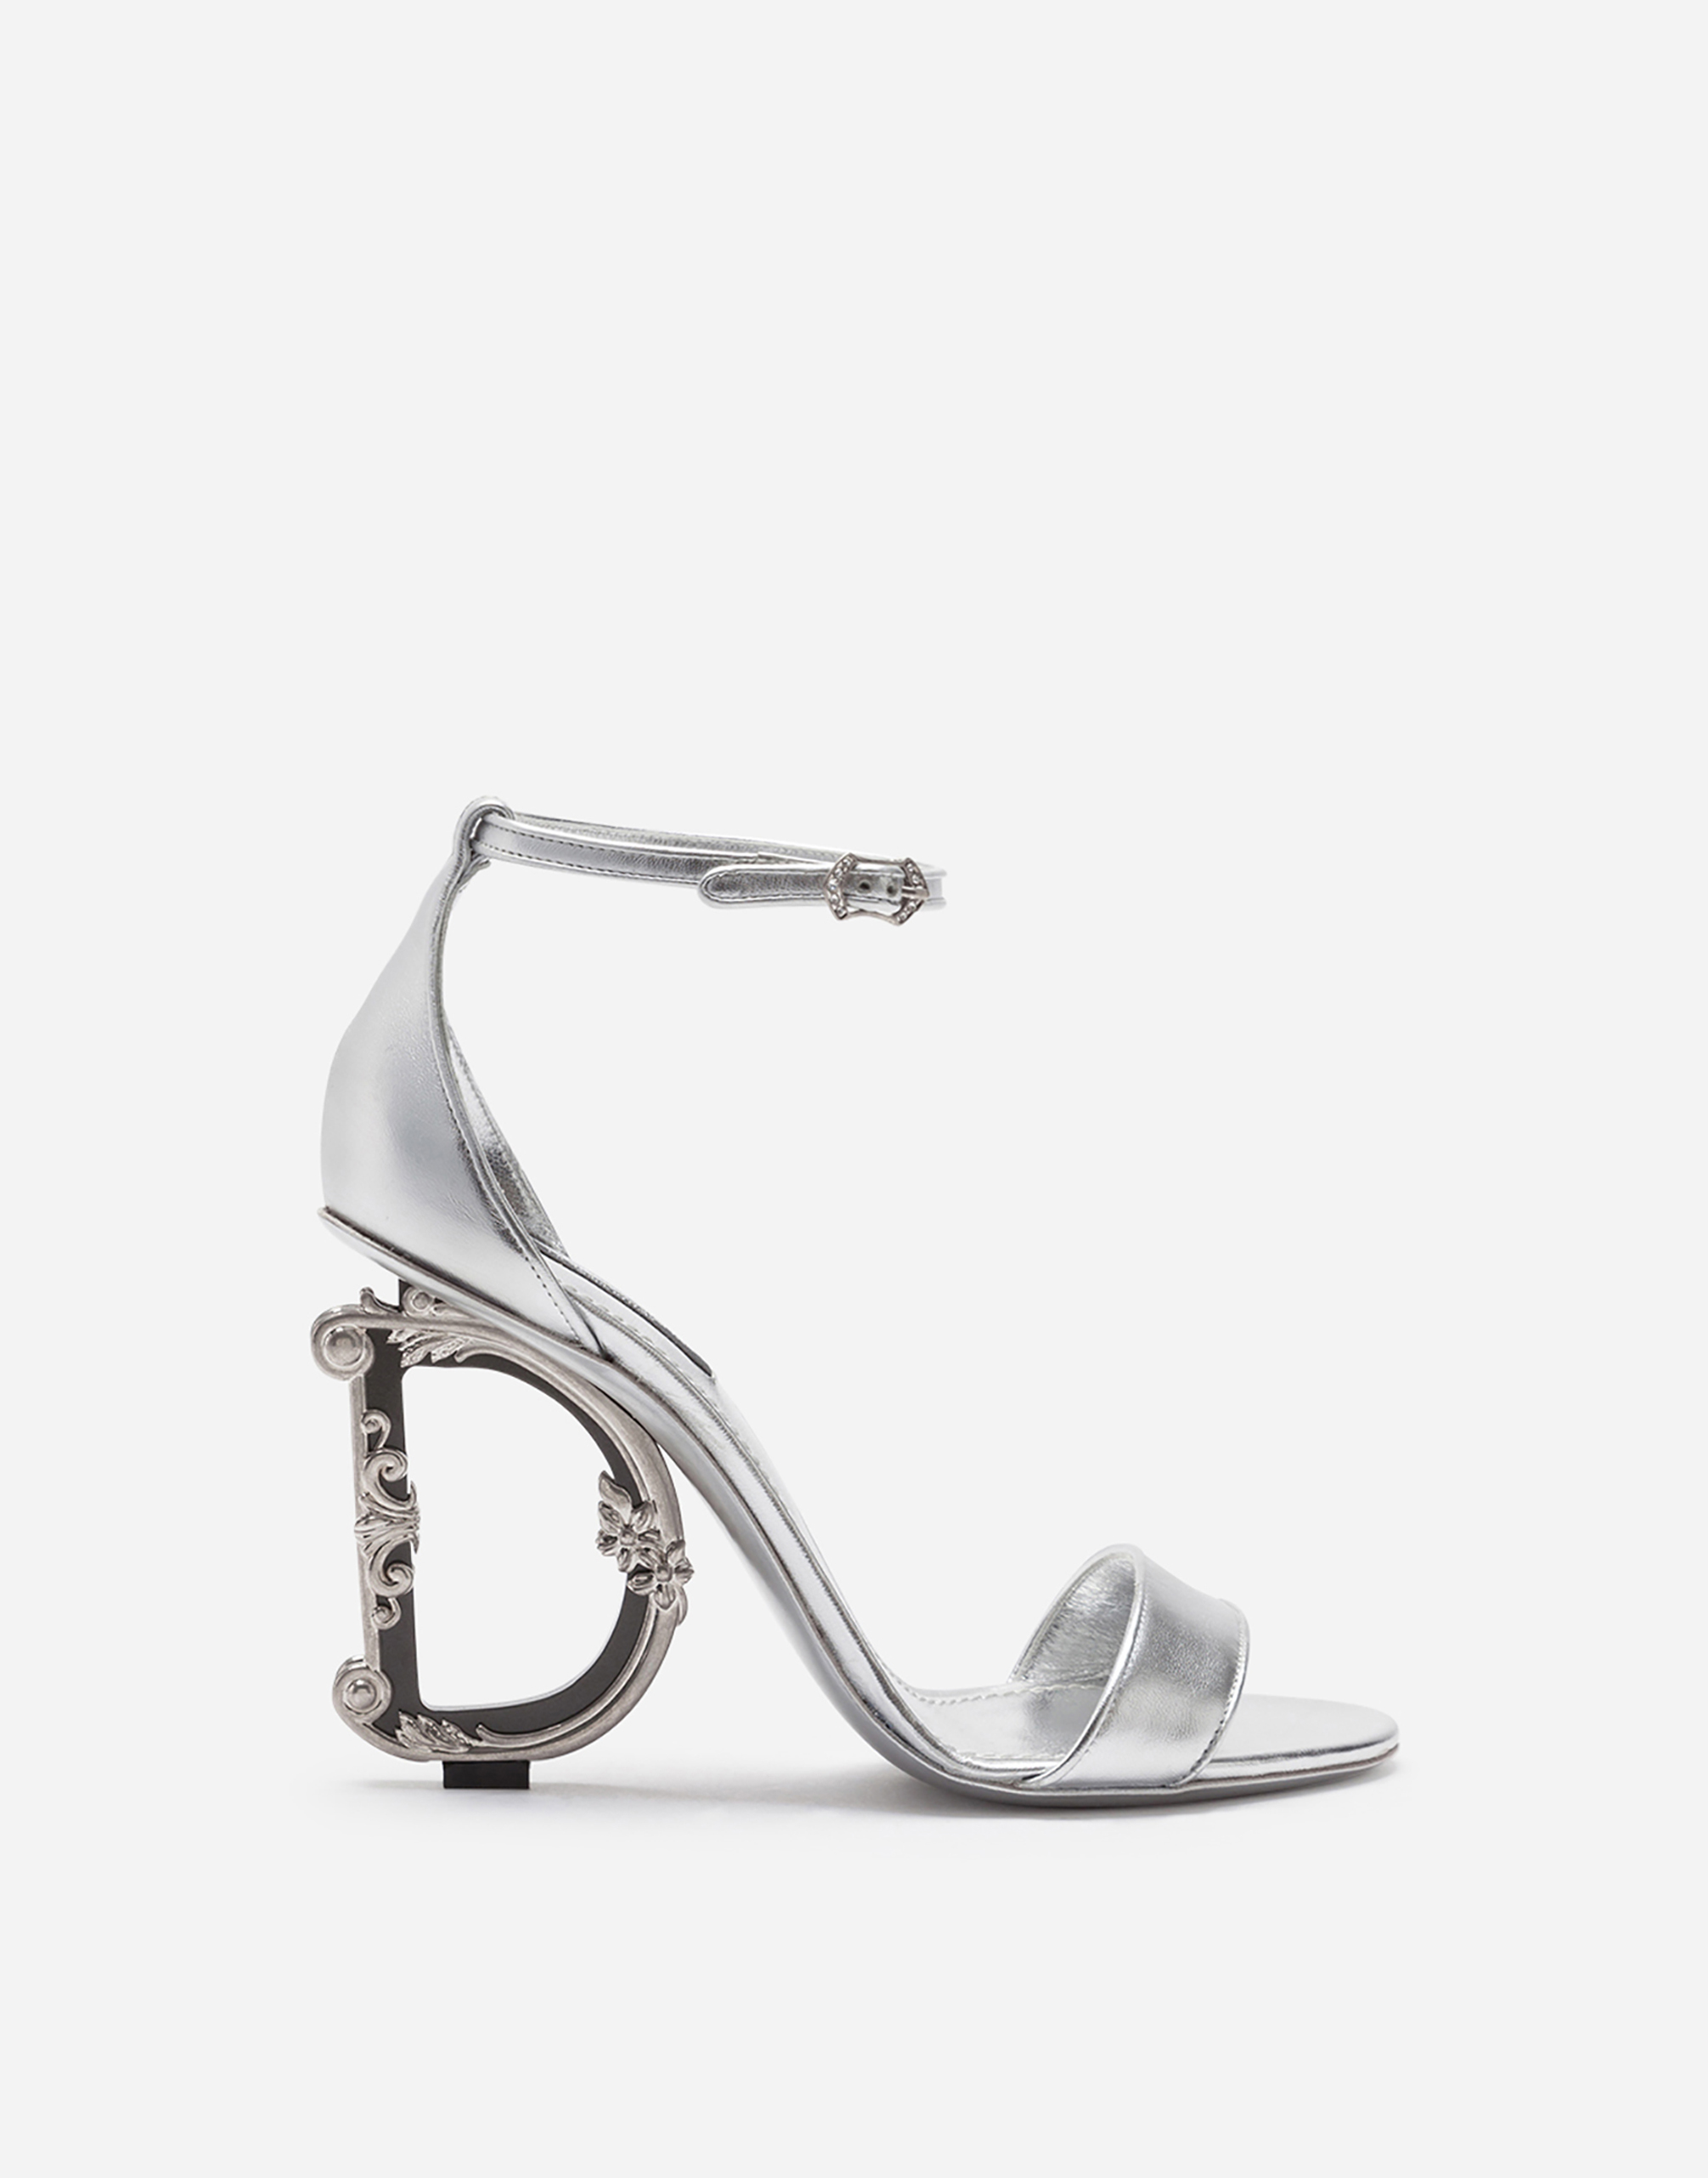 Nappa mordore sandals with baroque DG heel in Silver